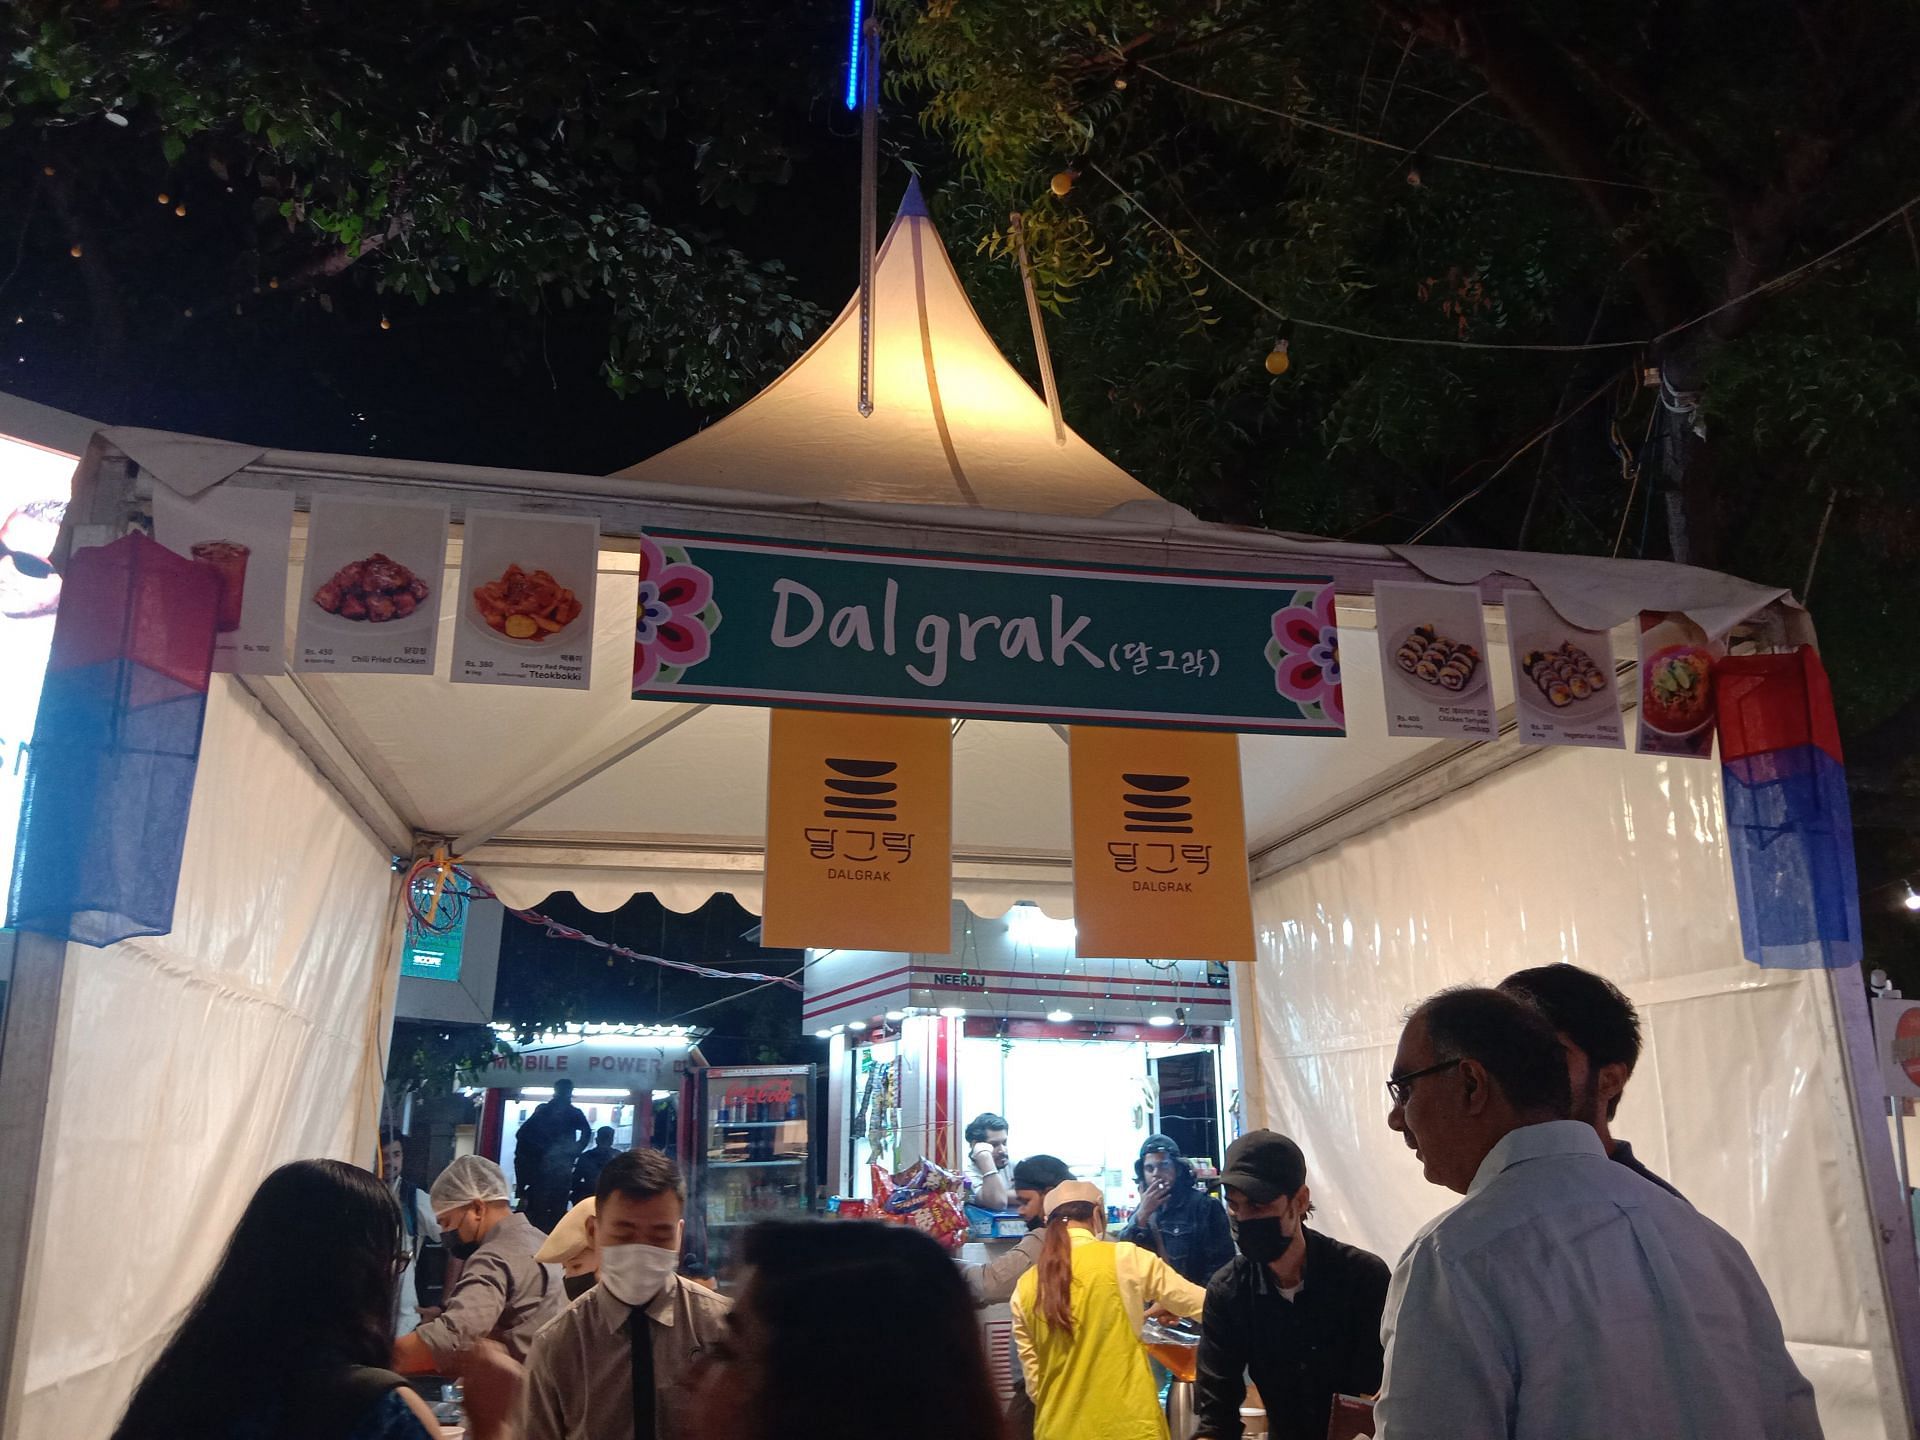 Korean food from Dalgrak at 2022 Korea Street Fair (Image via Sportskeeda)